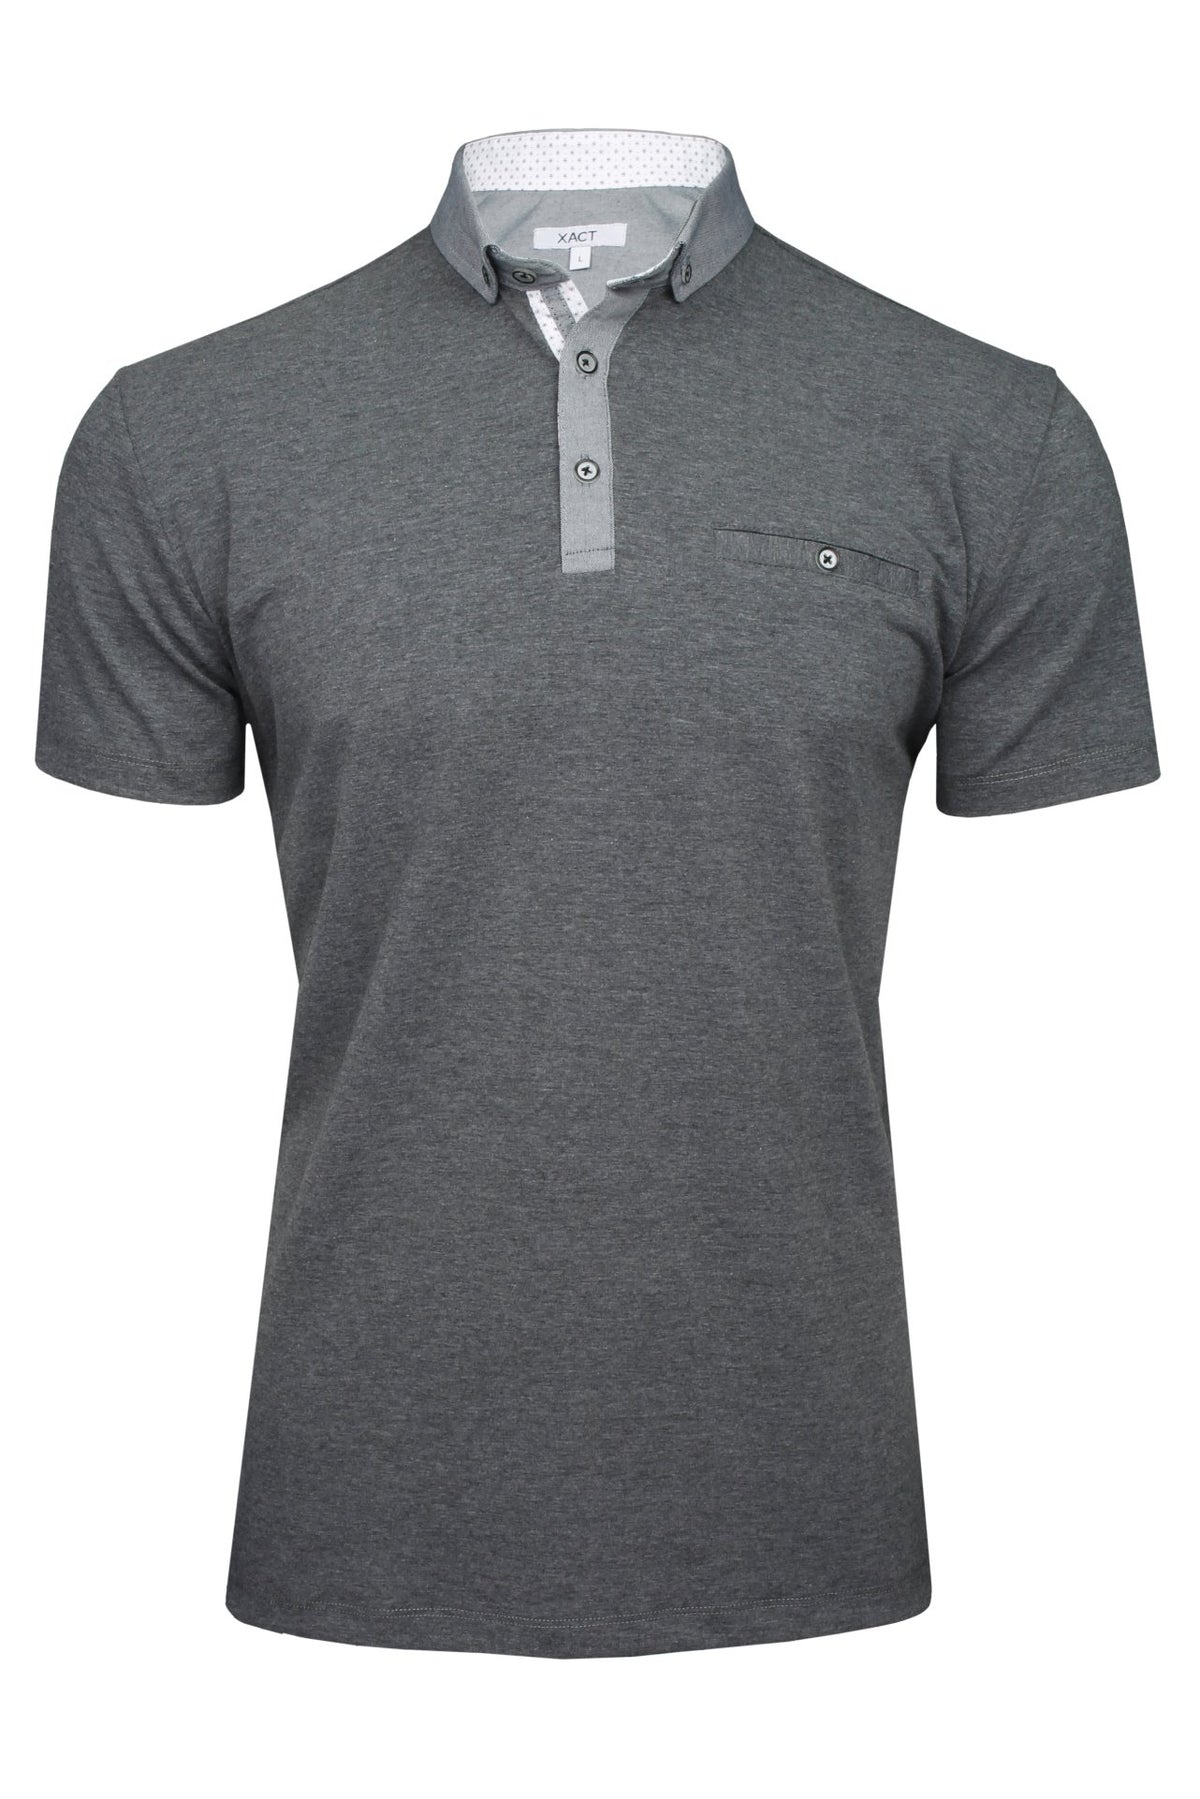 Xact Mens Polo Shirt with Short Sleeves and Button Down Collar, 01, Xp1076, Dark Grey